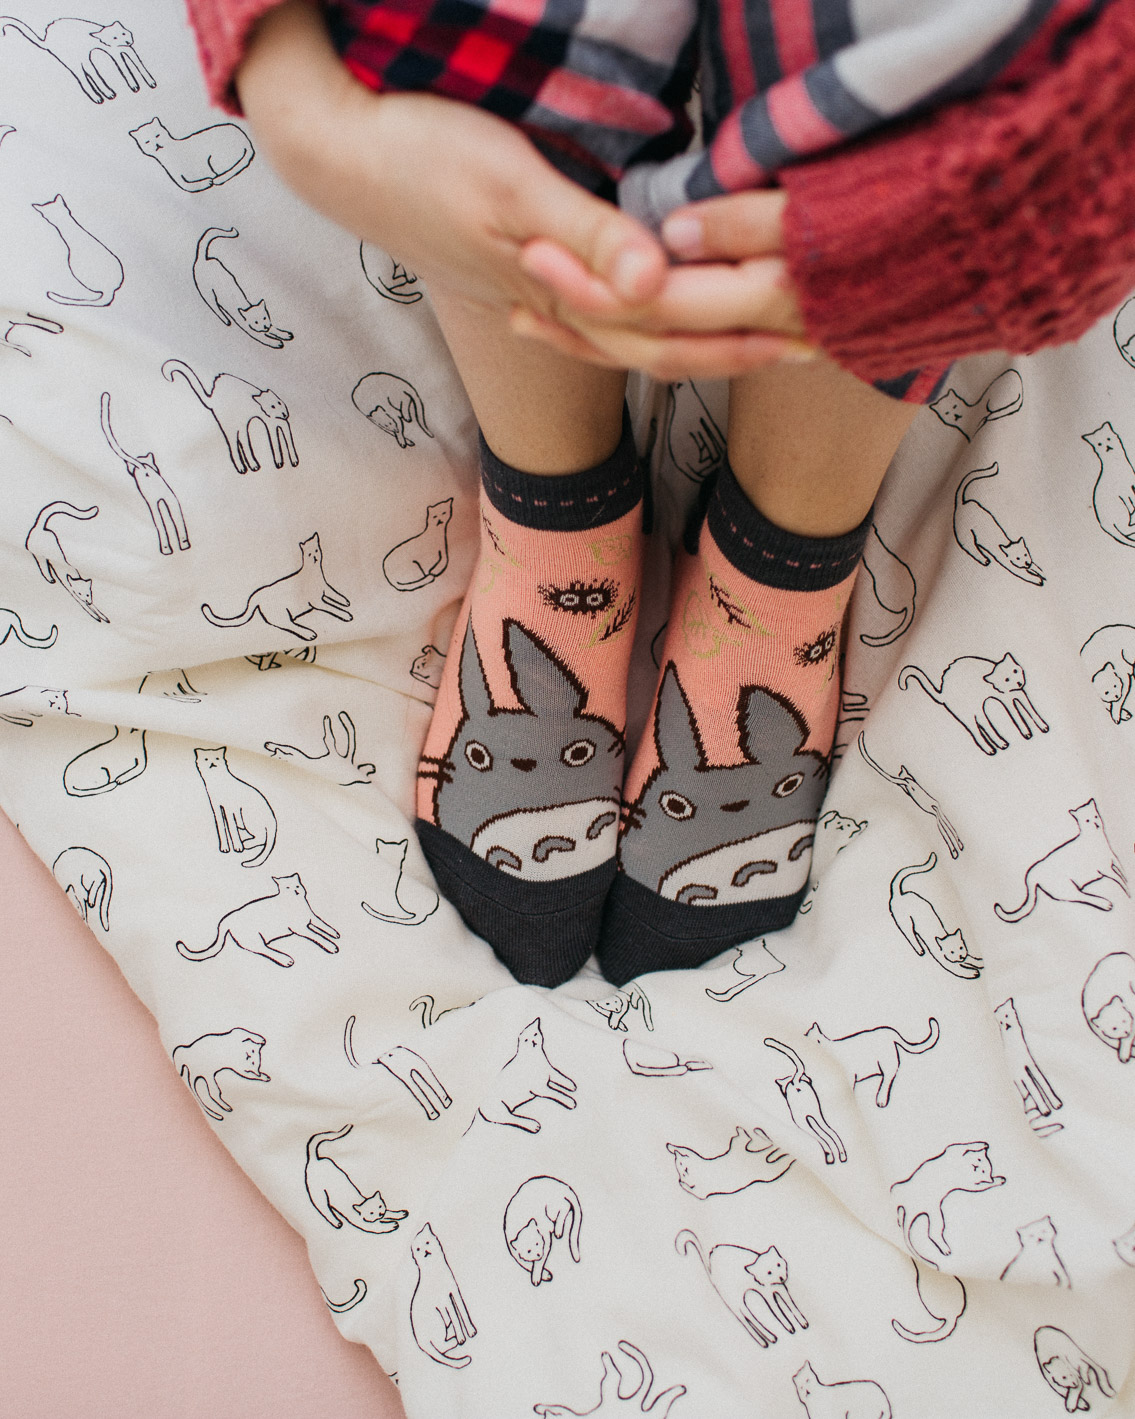 Totoro socks & cat duvet - The cat, you and us